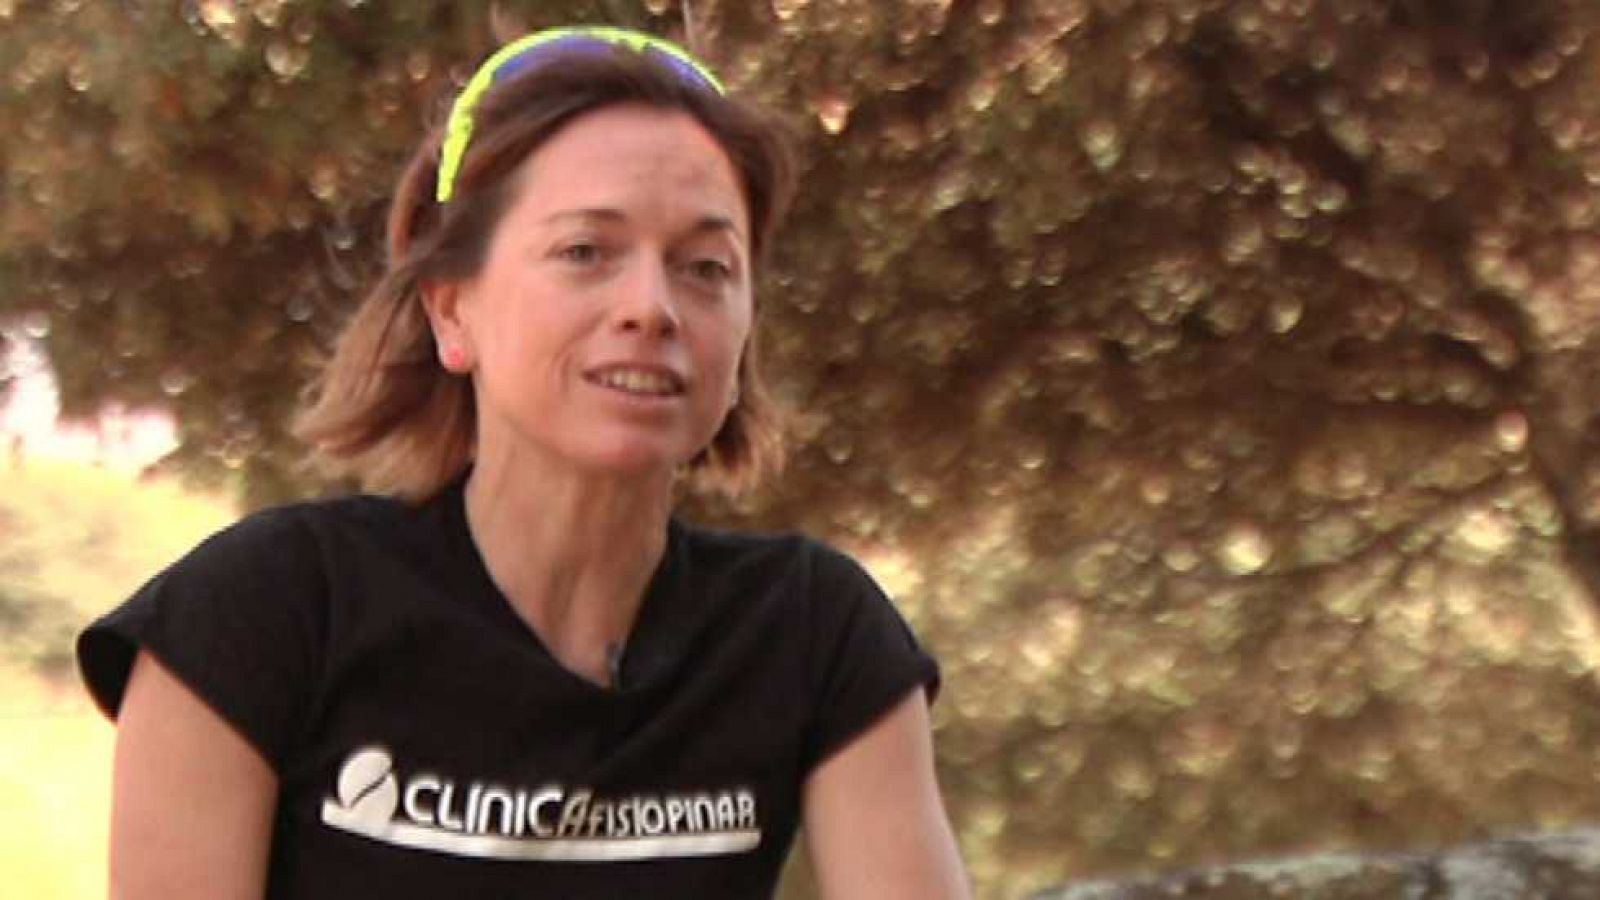 Mujer y deporte - Triatlón: Marina Damlaimcourt